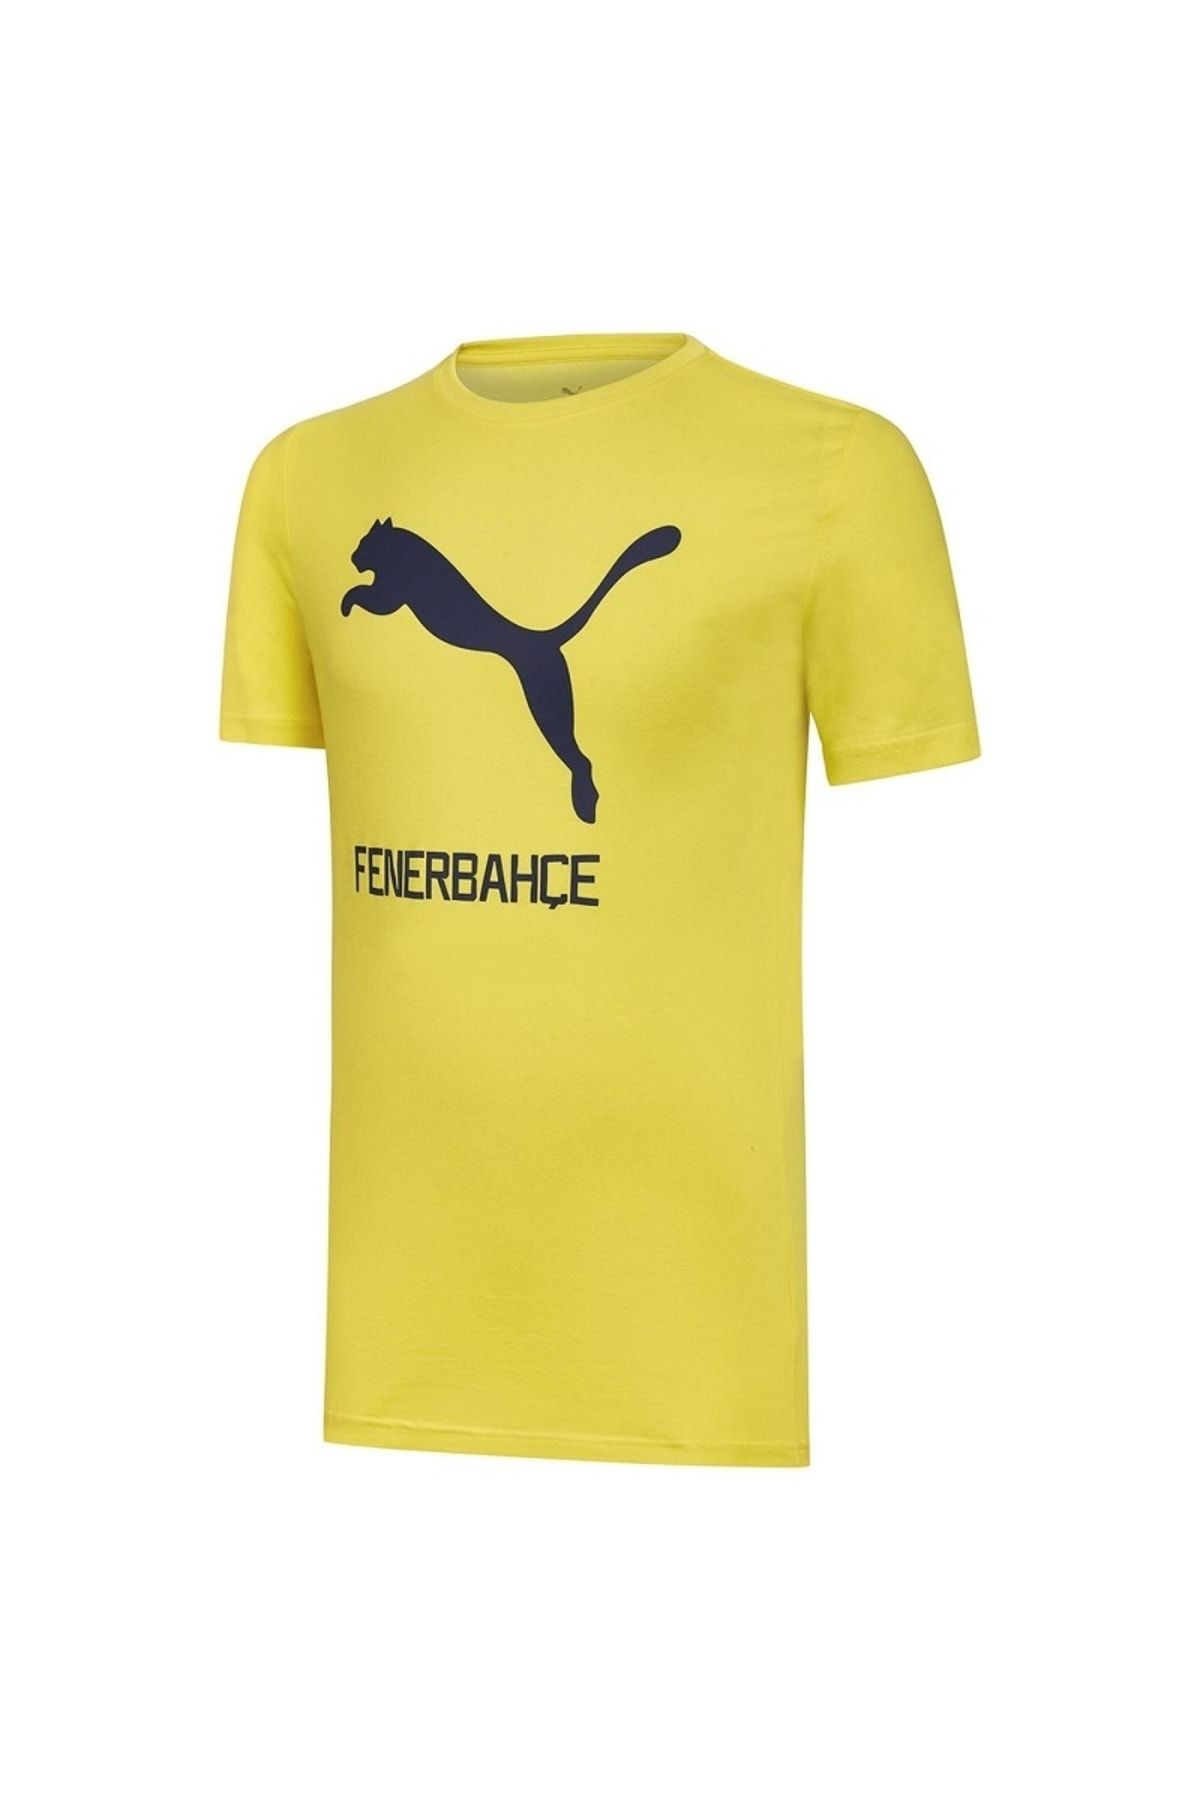 Puma Fenerbahçe Erkek T-Shirt